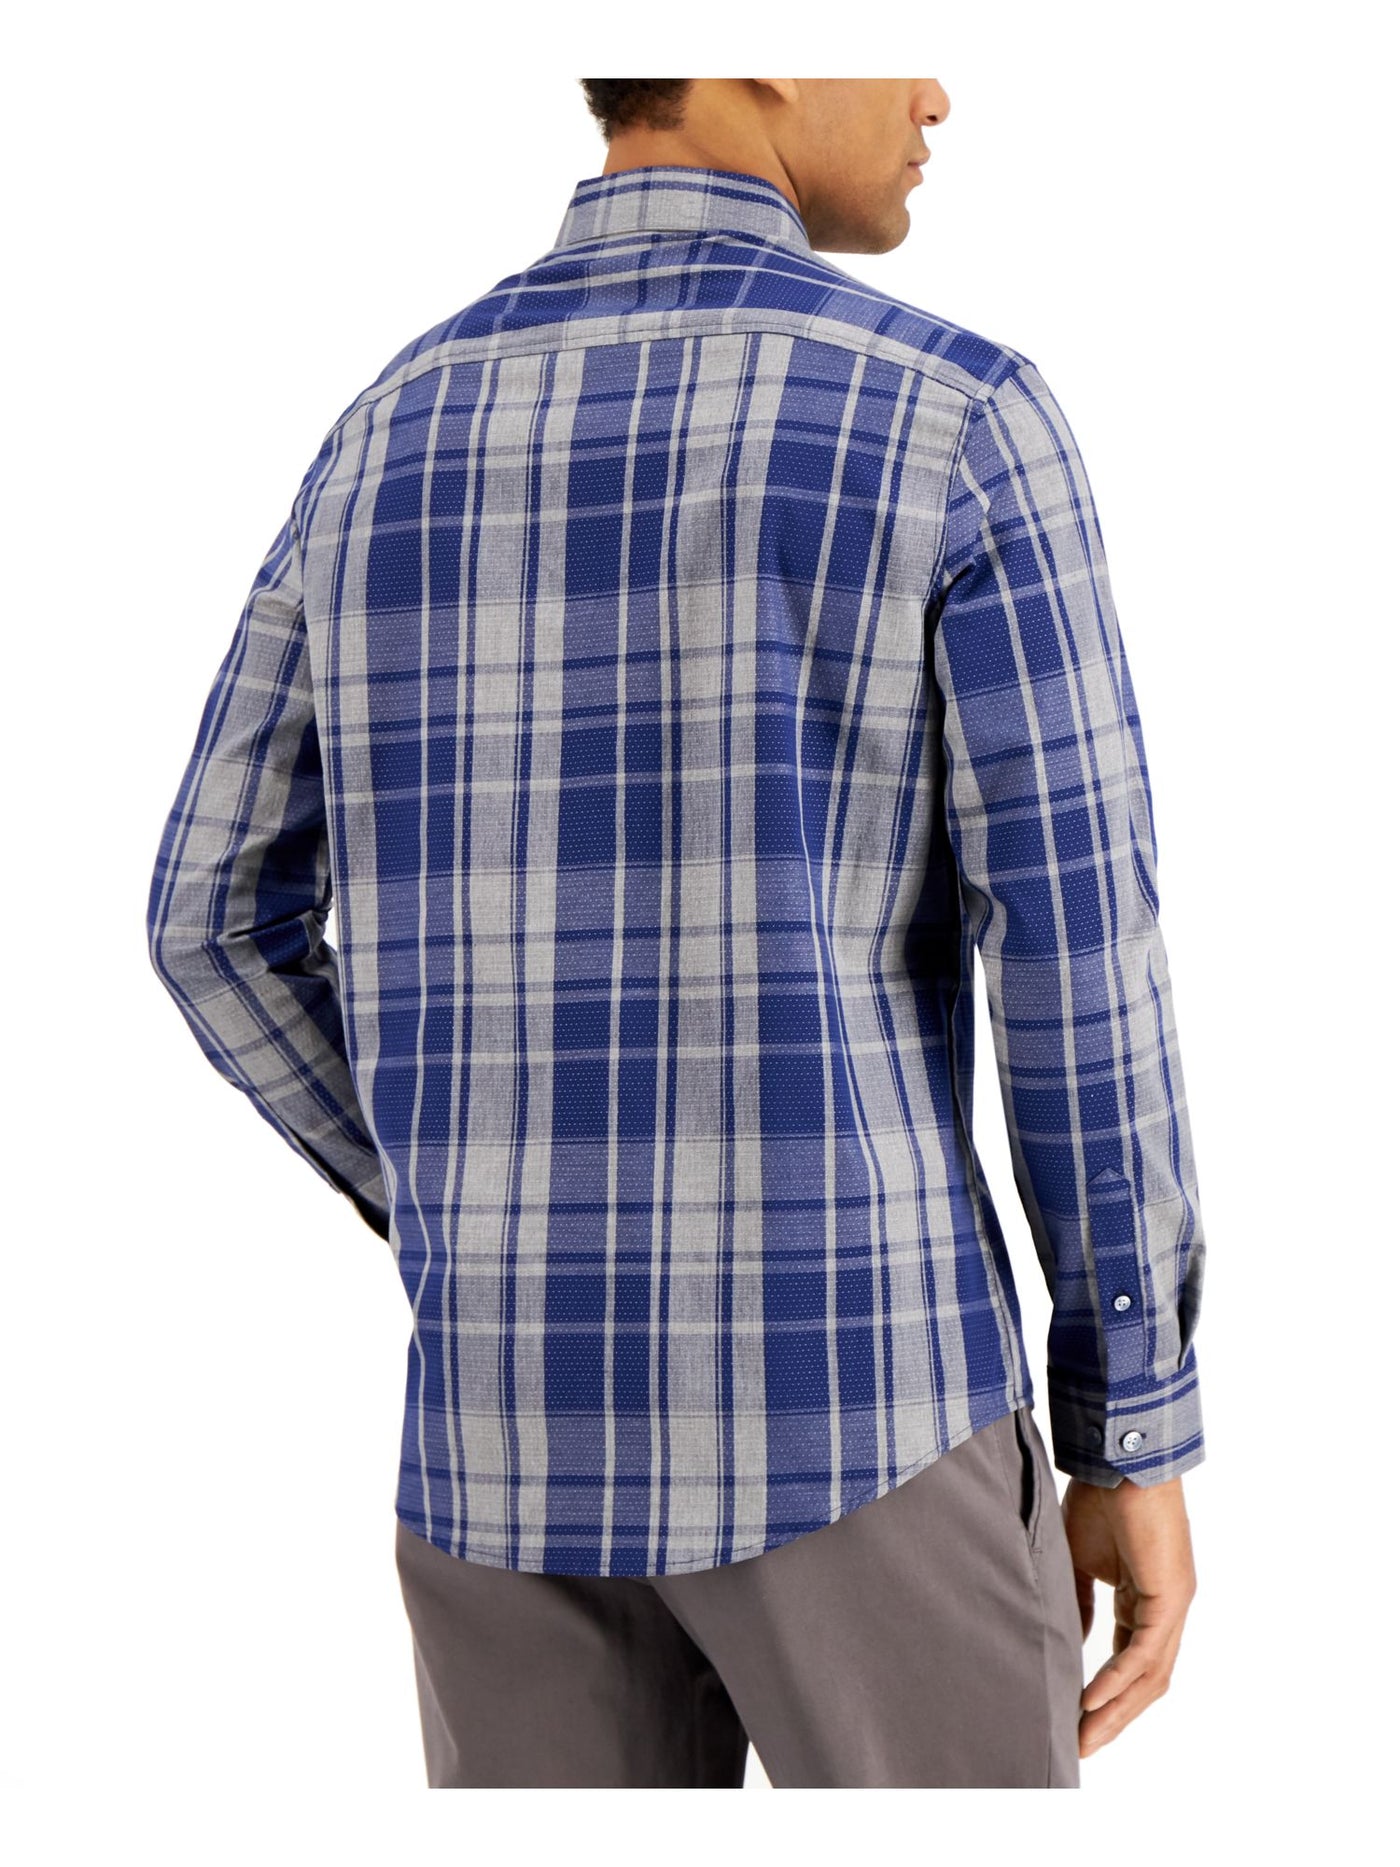 TASSO ELBA Mens Navy Windowpane Plaid Long Sleeve Classic Fit Button Down Cotton Casual Shirt S